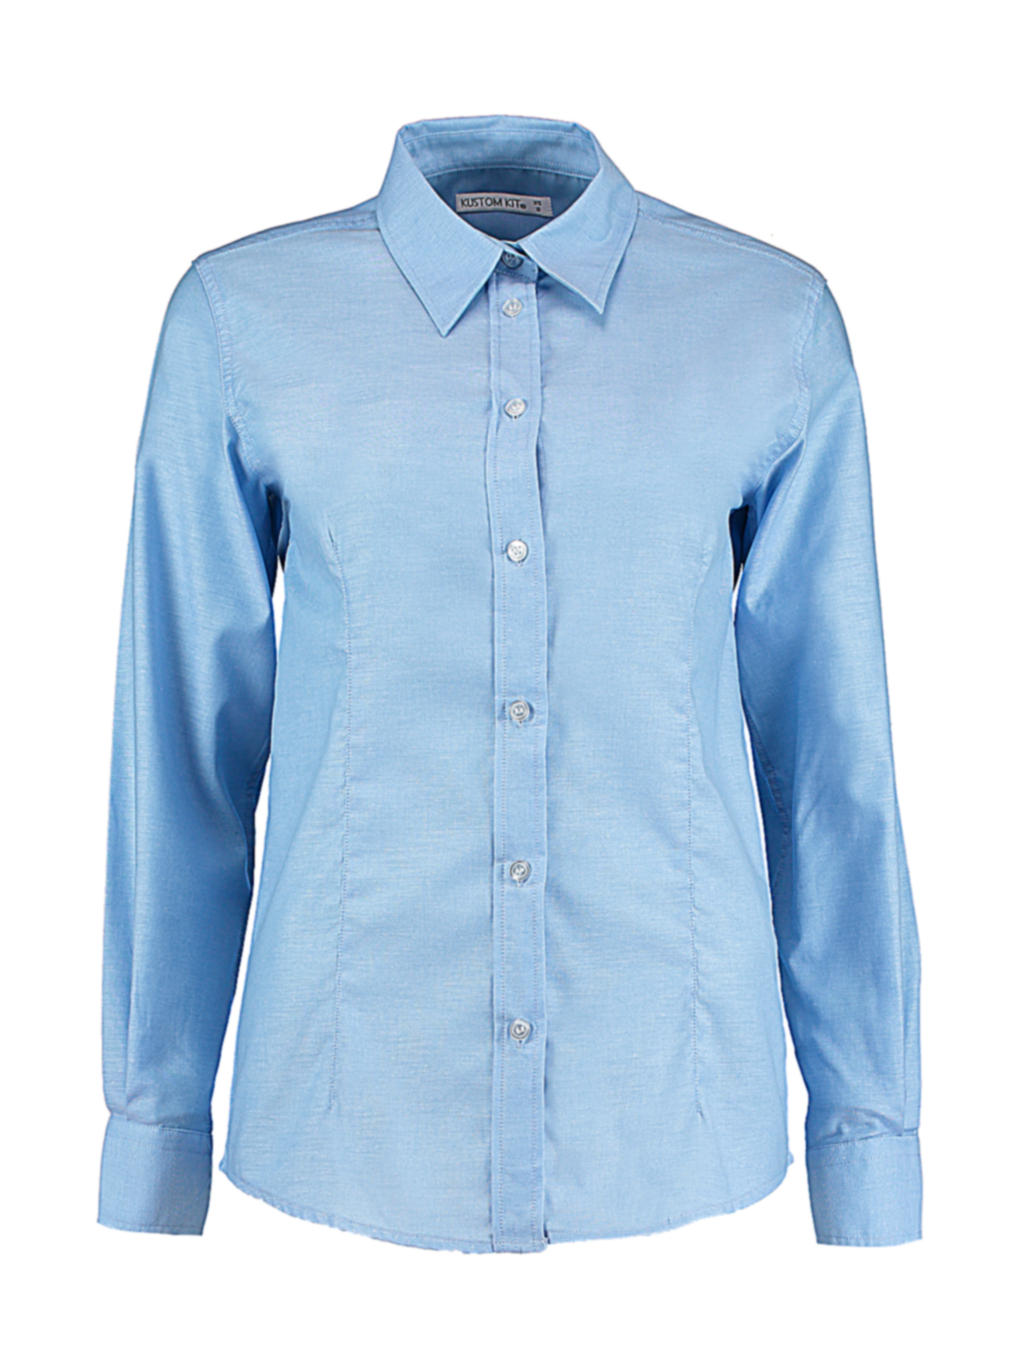 Blúzka Workwear Oxford s dlhými rukávmi - light blue